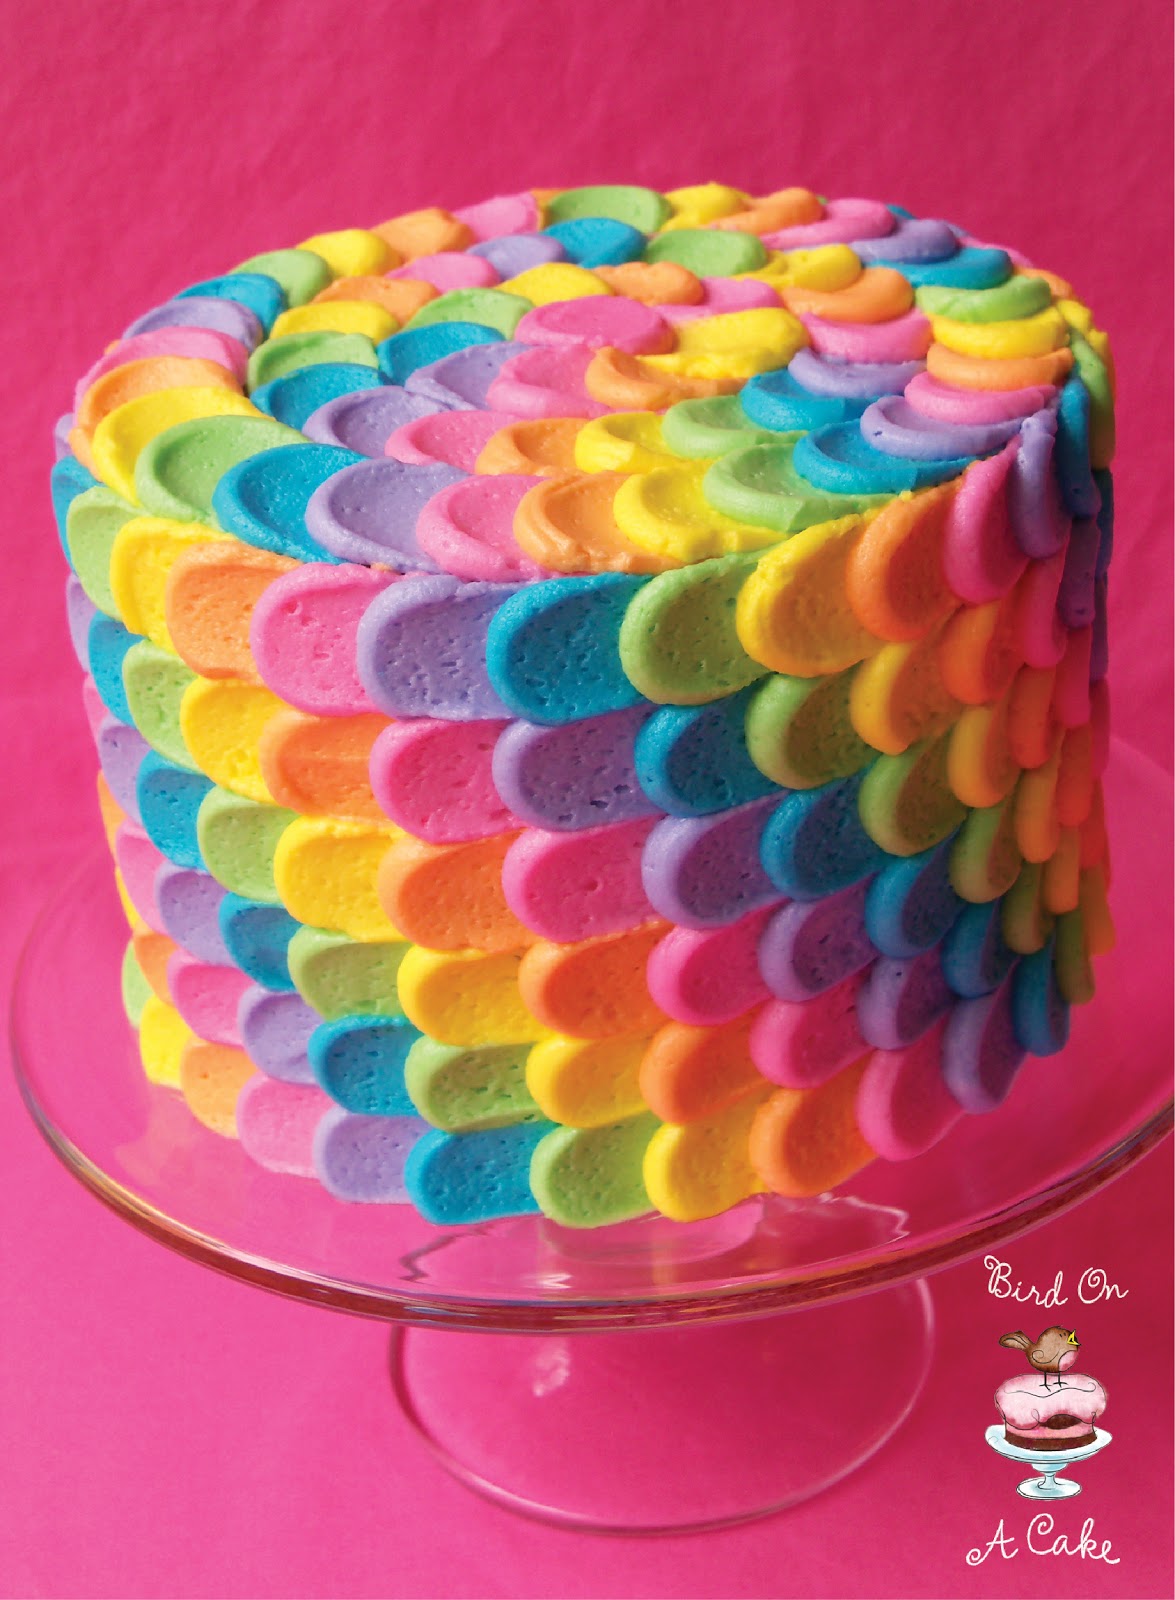 Colorful Cake Designs 4